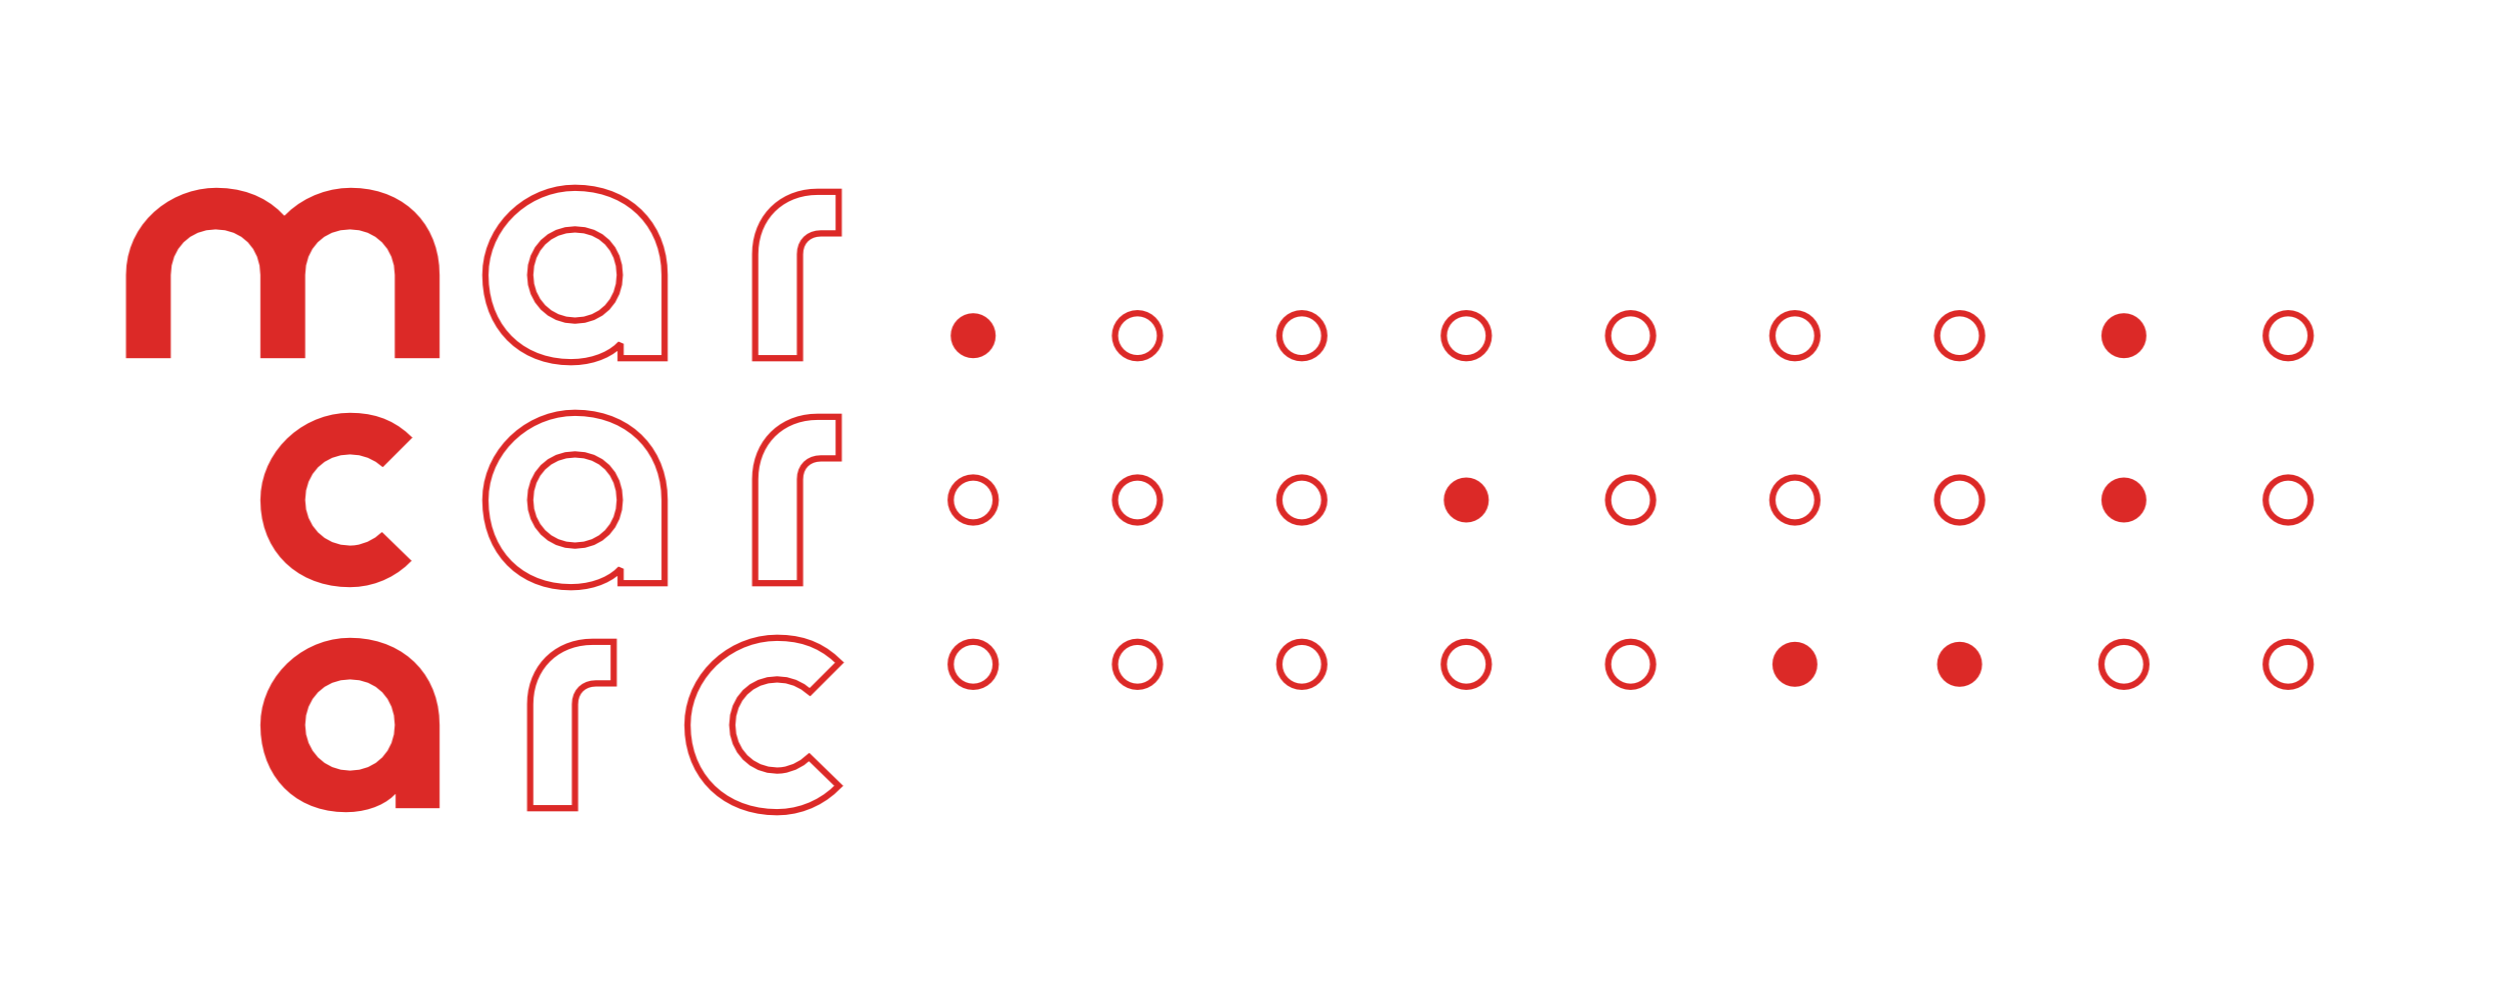 Final logo with dot pattern